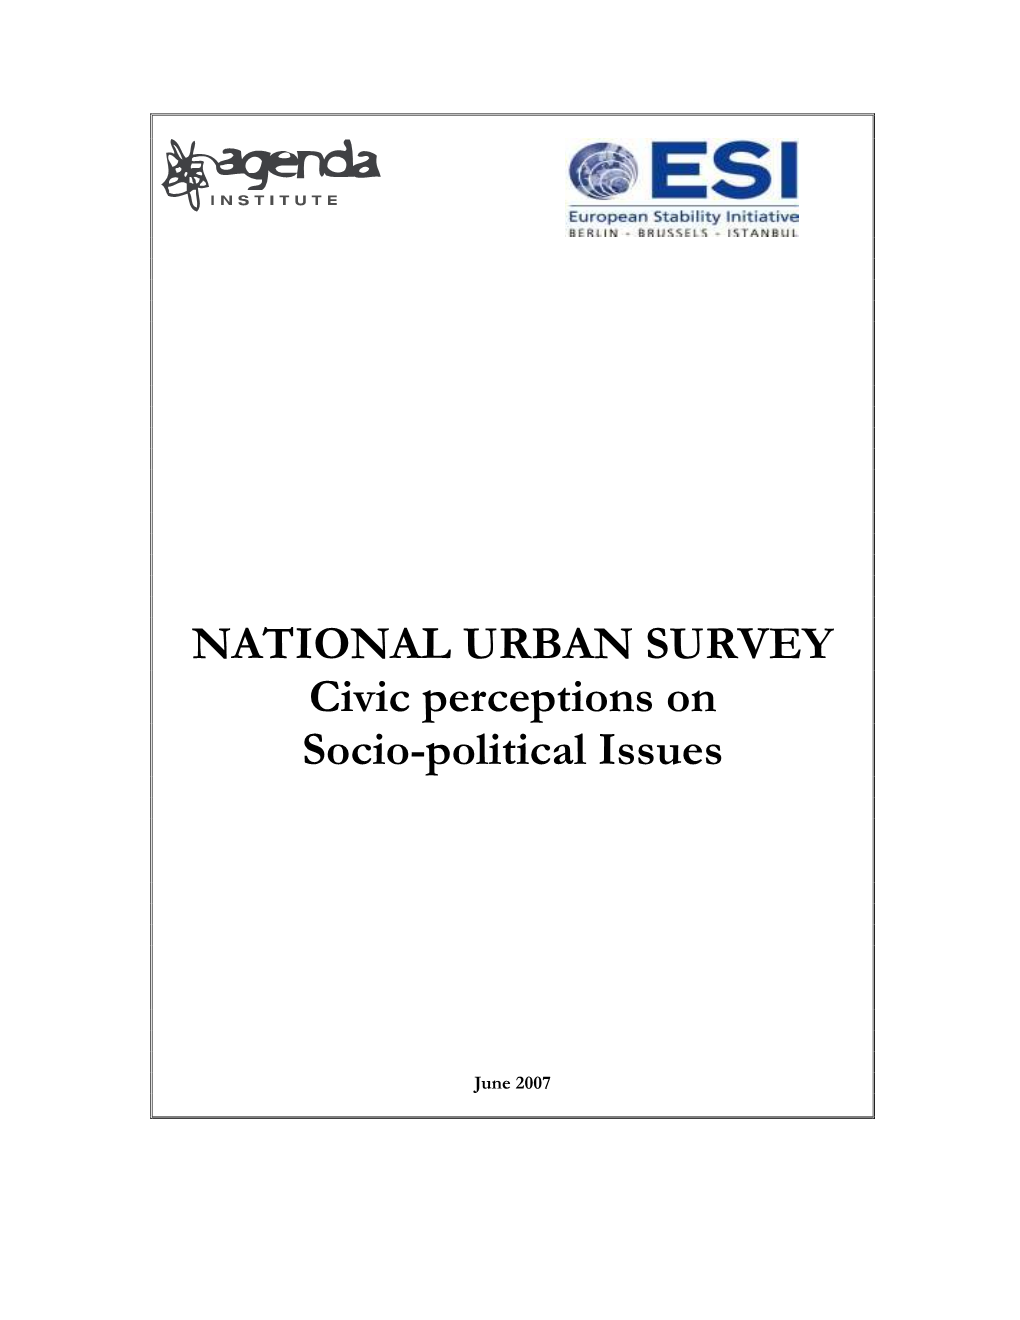 NATIONAL URBAN SURVEY Civic Perceptions on Socio-Political Issues